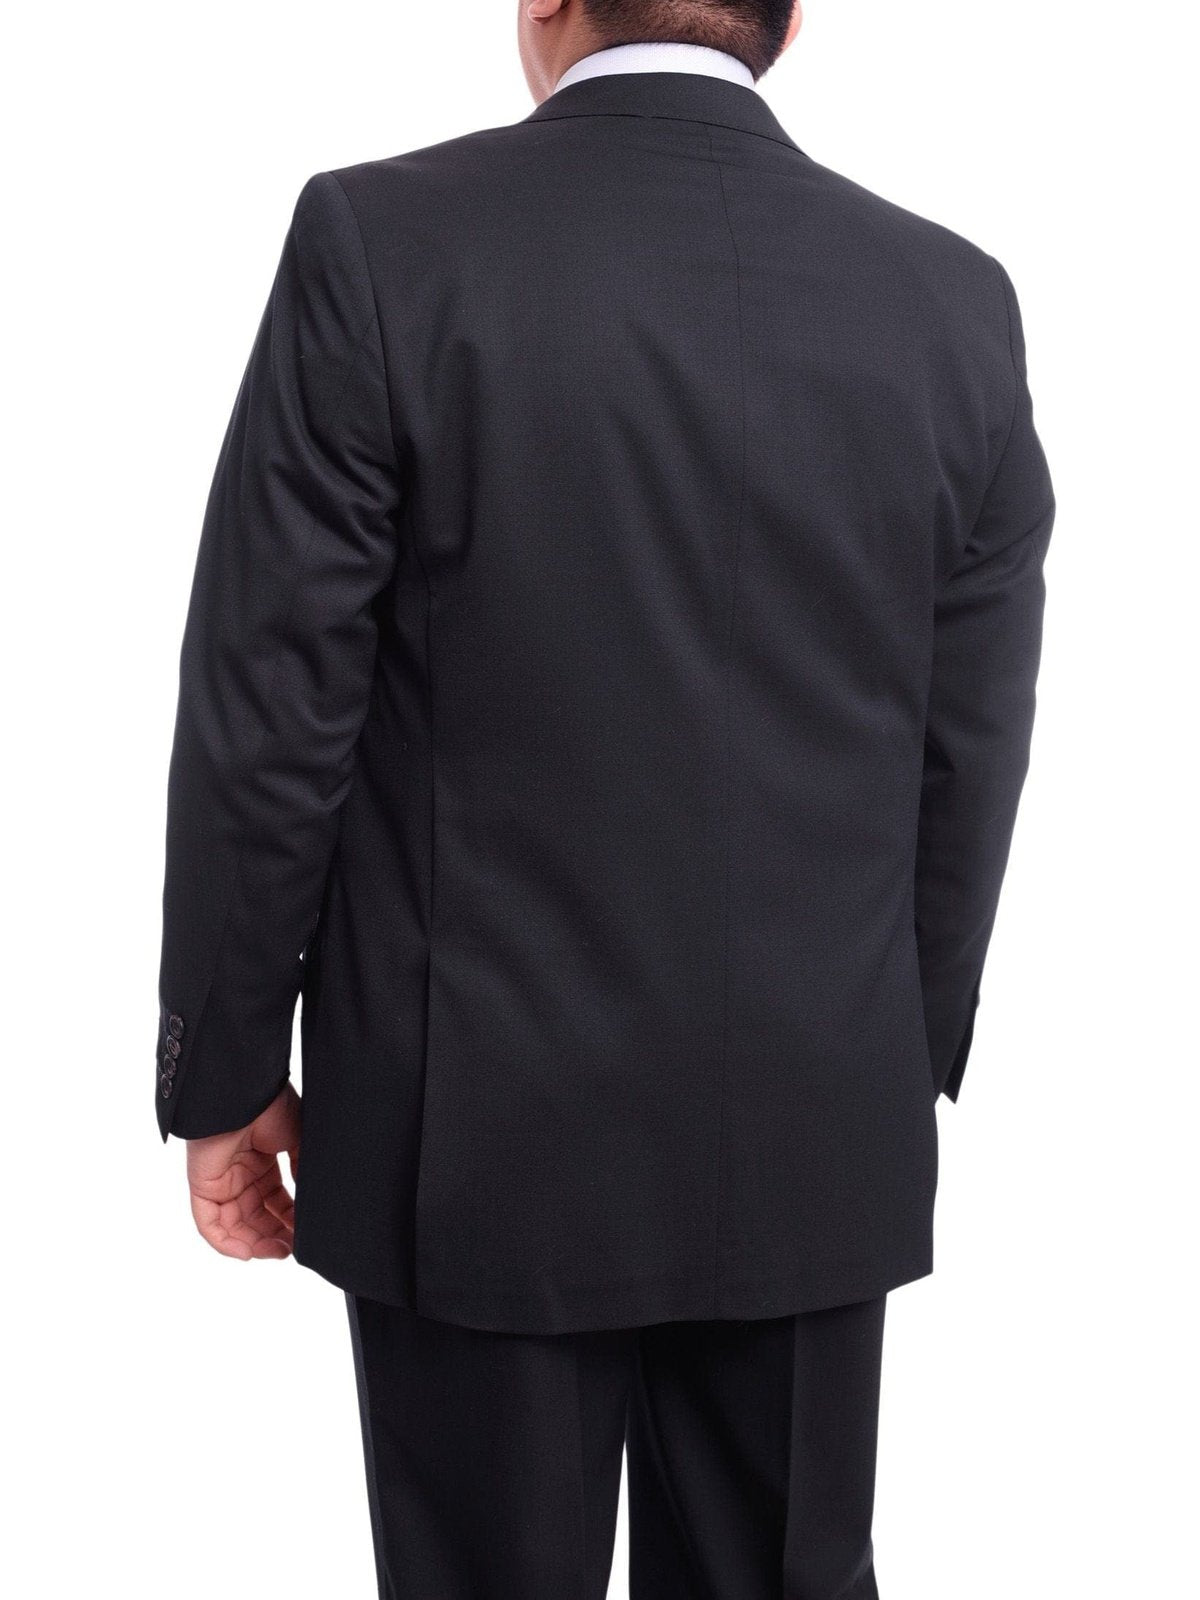 Arthur Black TWO PIECE SUITS Men&#39;s Arthur Black Executive Portly Fit Solid Navy Blue Two Button Wool Suit